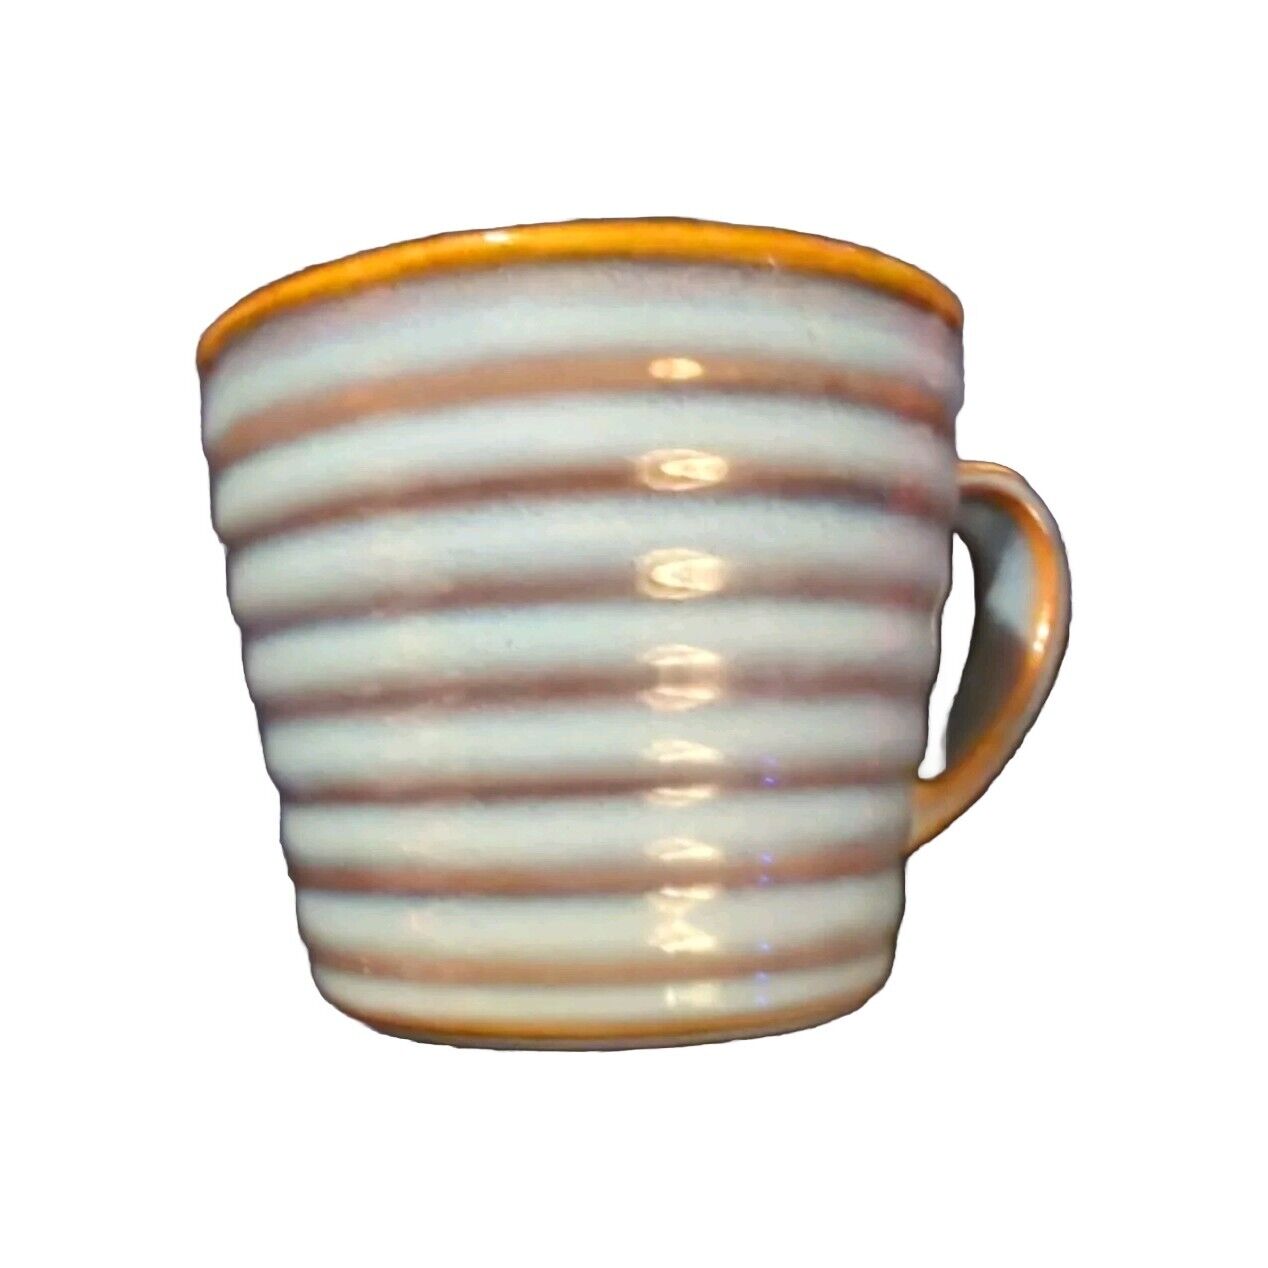 Starbucks Coffee Mug Cup Light Blue & Brown Ribbed Ceramic Mug 12 oz 2008